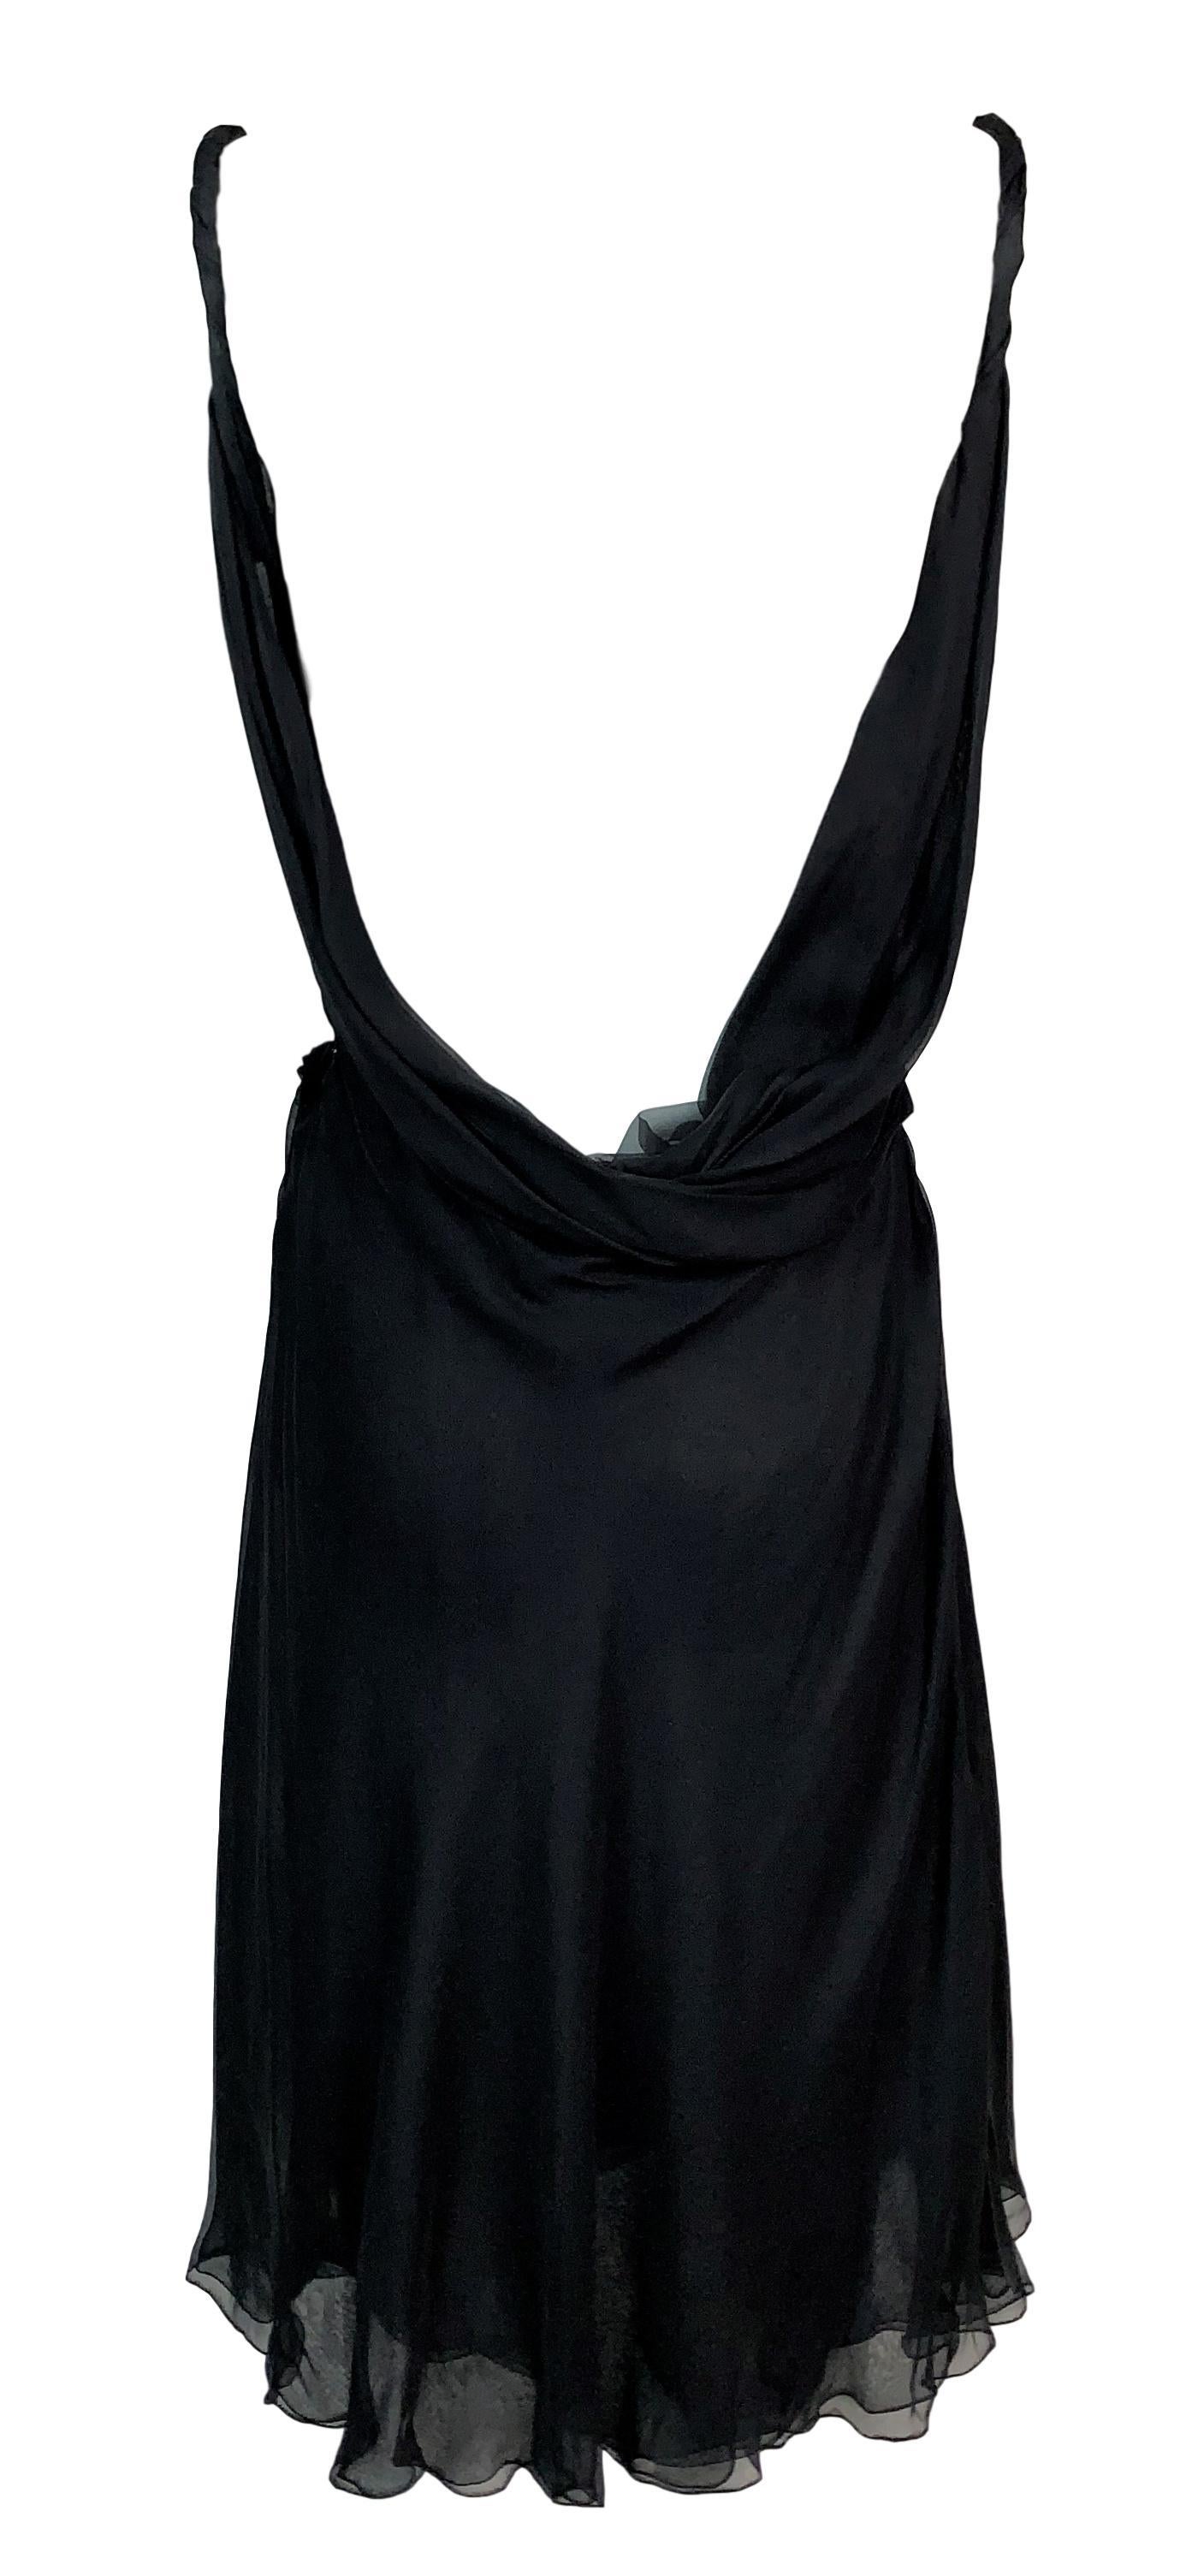 Women's S/S 2001 Gianni Versace Plunging Sheer Black Wrap Bodysuit Mini Dress